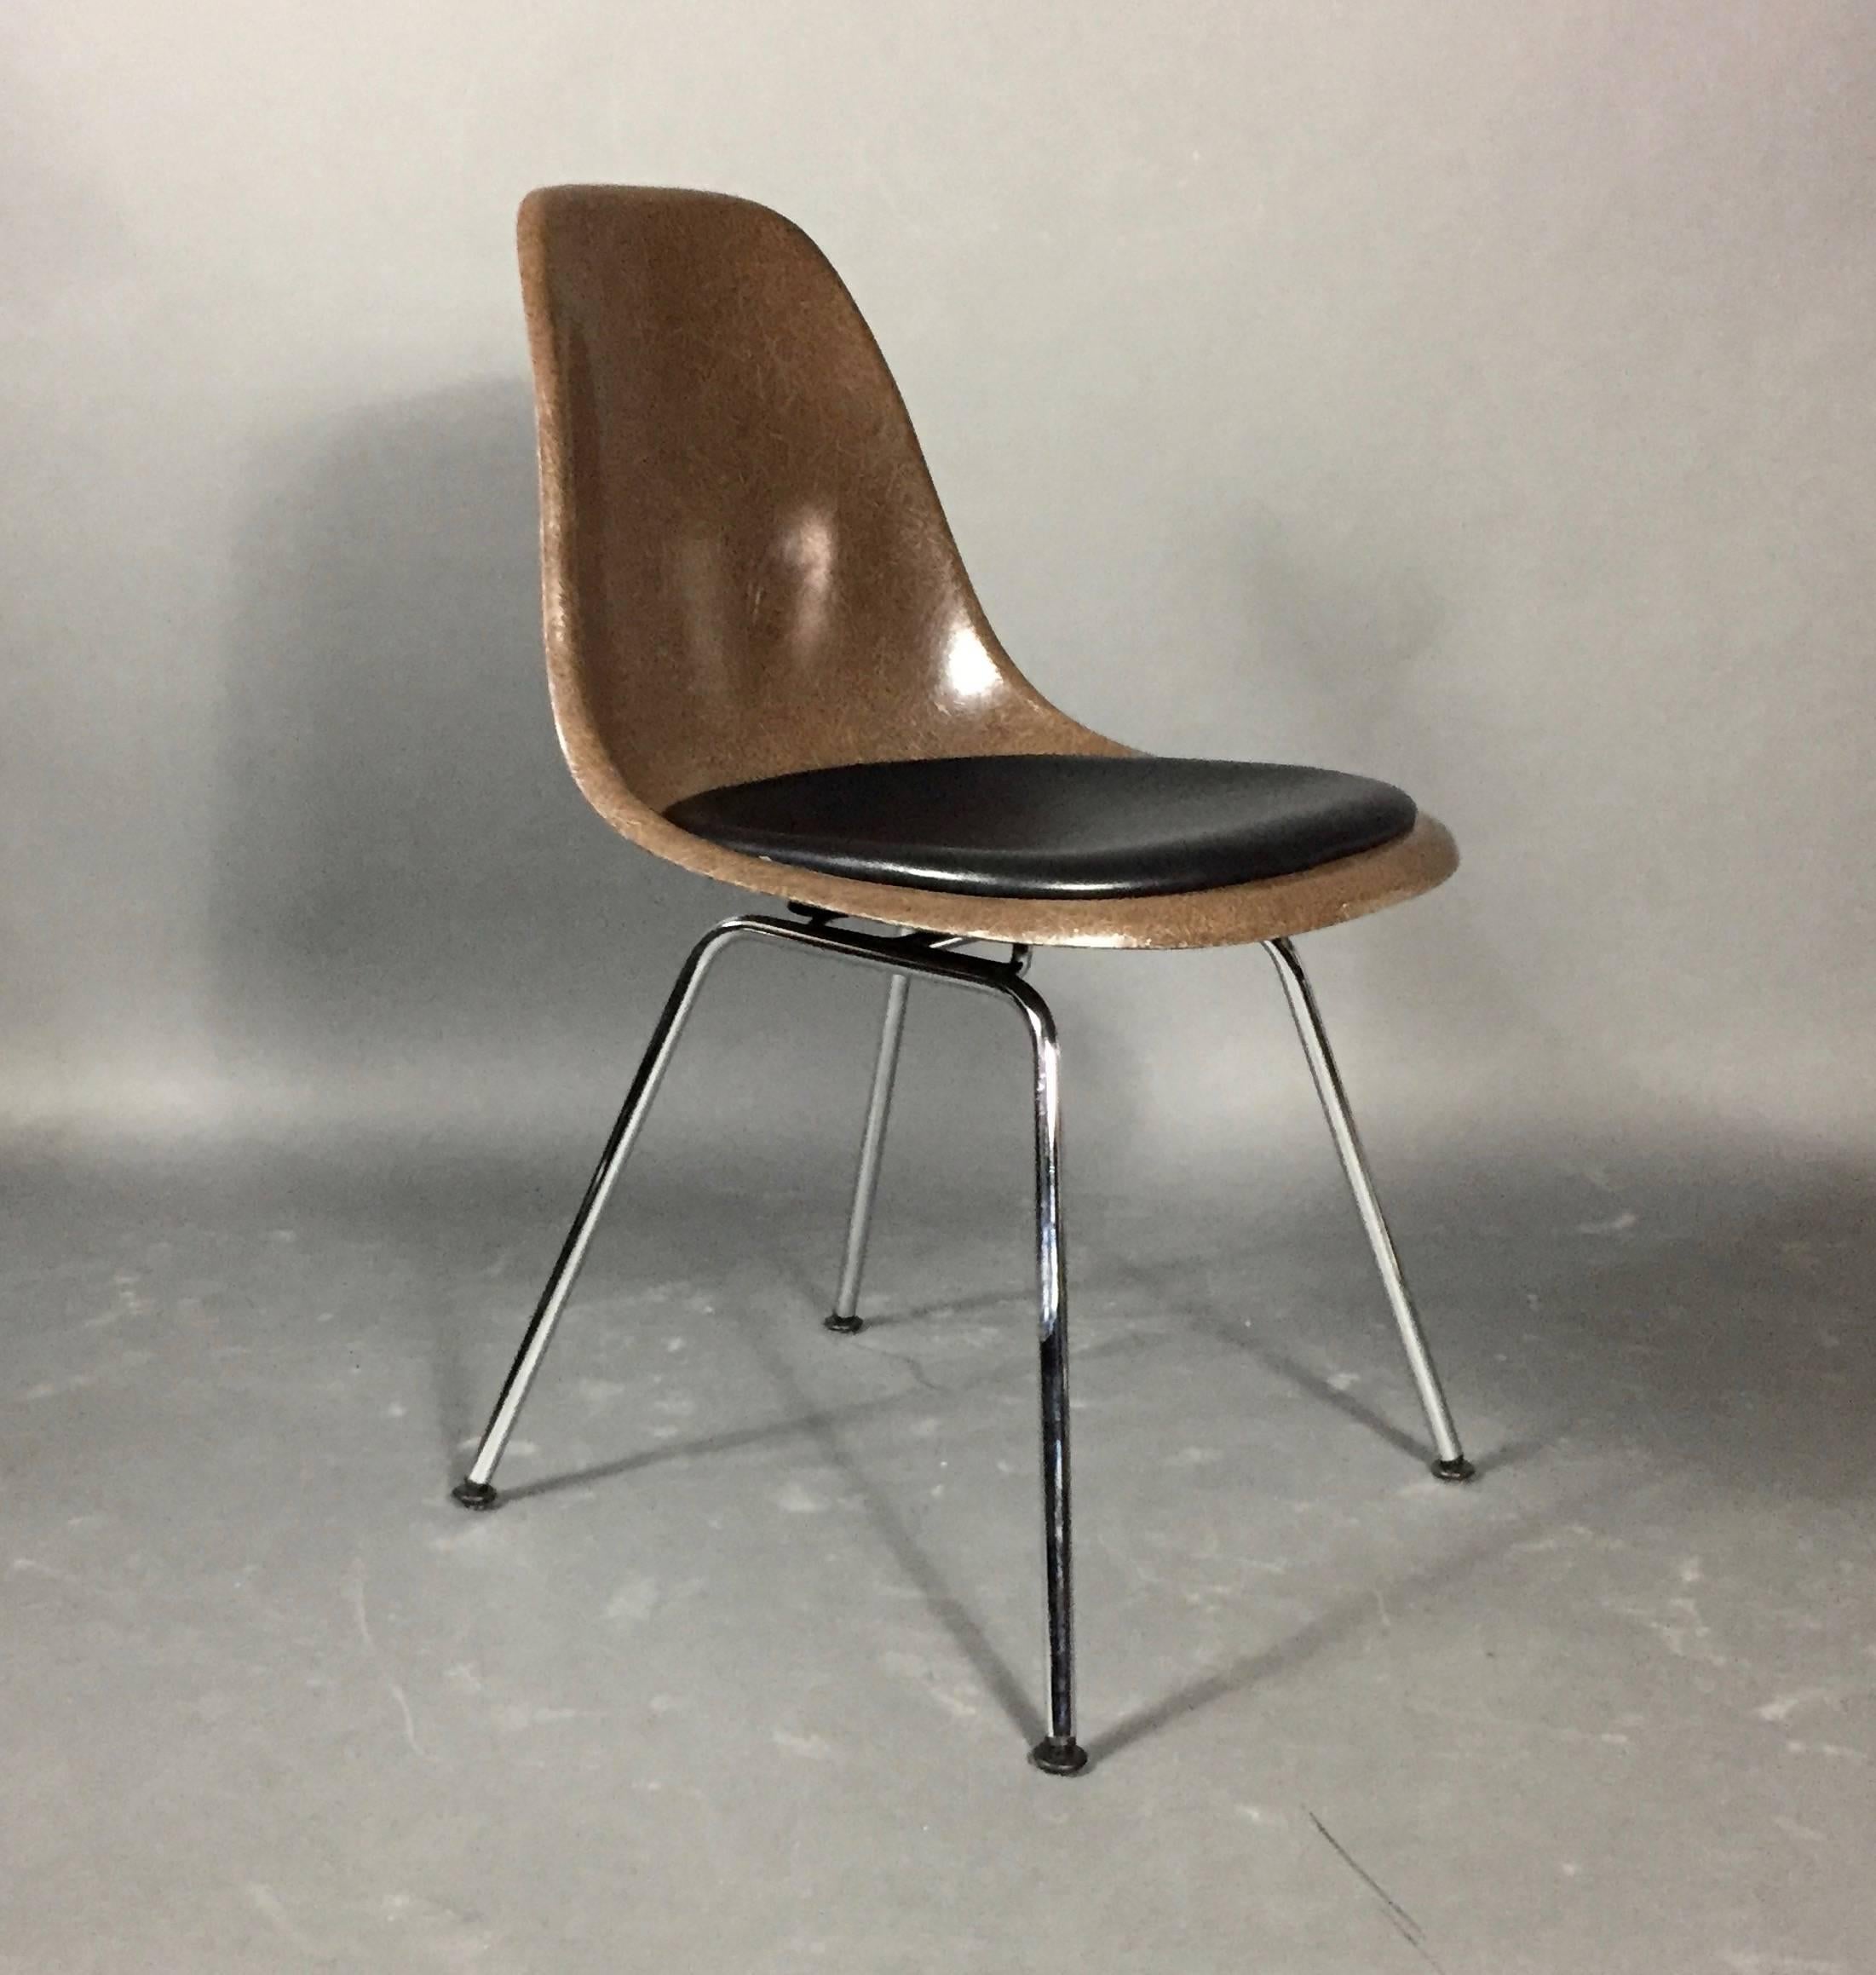 Mid-20th Century Charles and Ray Eames Fiberglass Shell Chairs, Vitra Base, Skai Seating